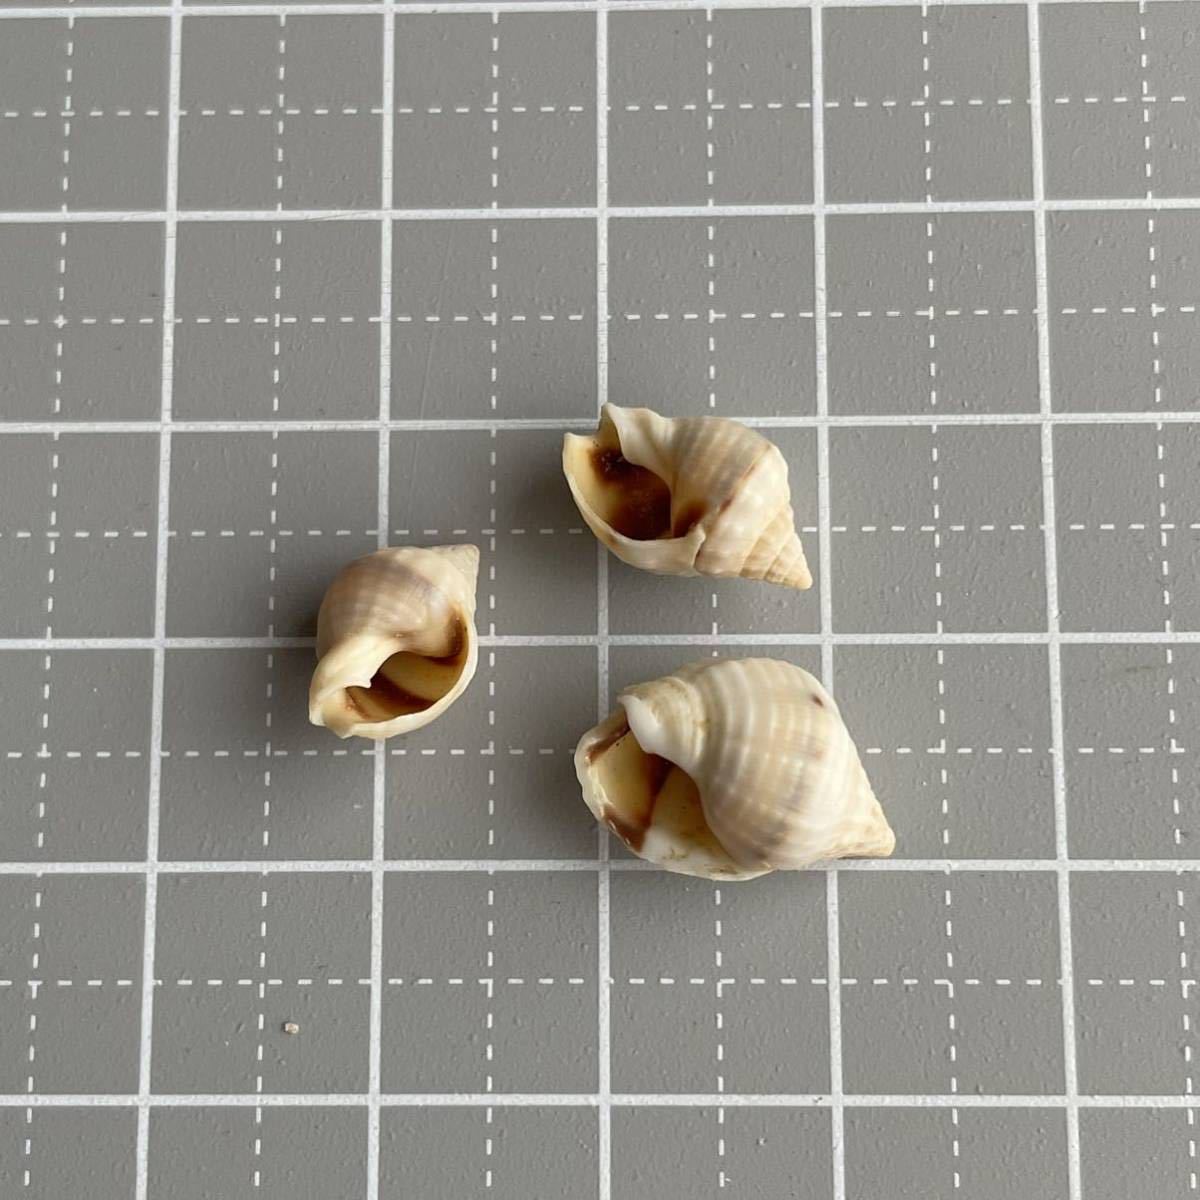 【 ... ②】  ракушка 　 раковина моллюска 　 ракушка  образец 　 образец 　 ручной работы   Запчасти 　... материал  　...　  книги  раковина моллюска 　 shell 　shell  пляж ...　 море  　 интерьер 